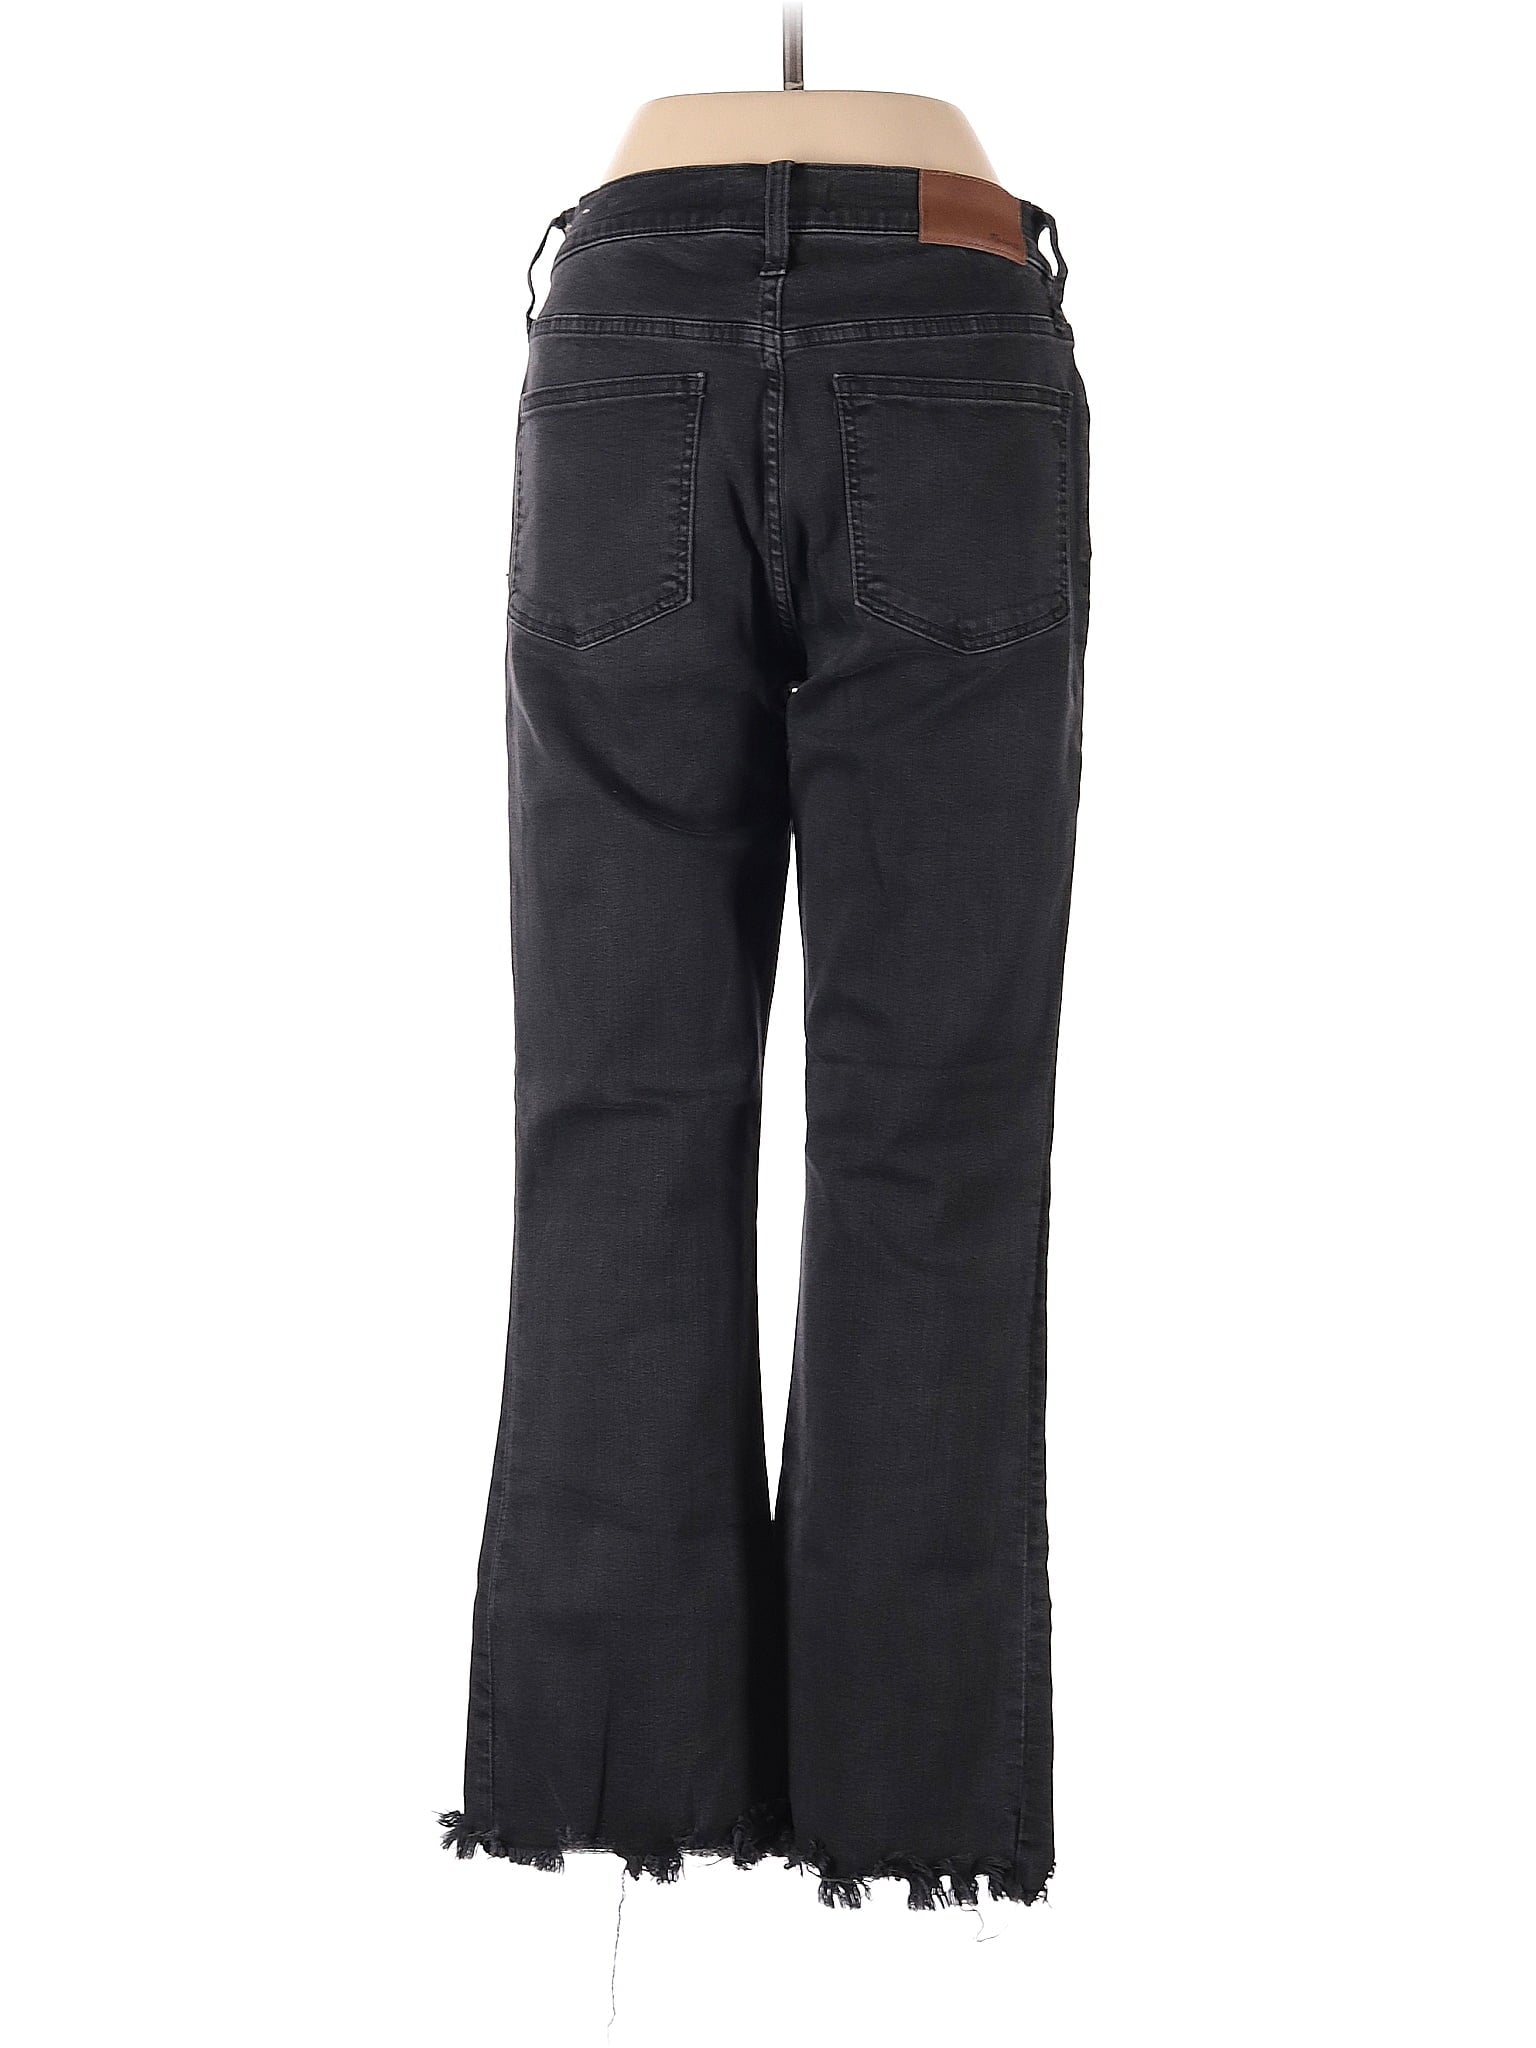 High-Rise Jeans waist size - 27